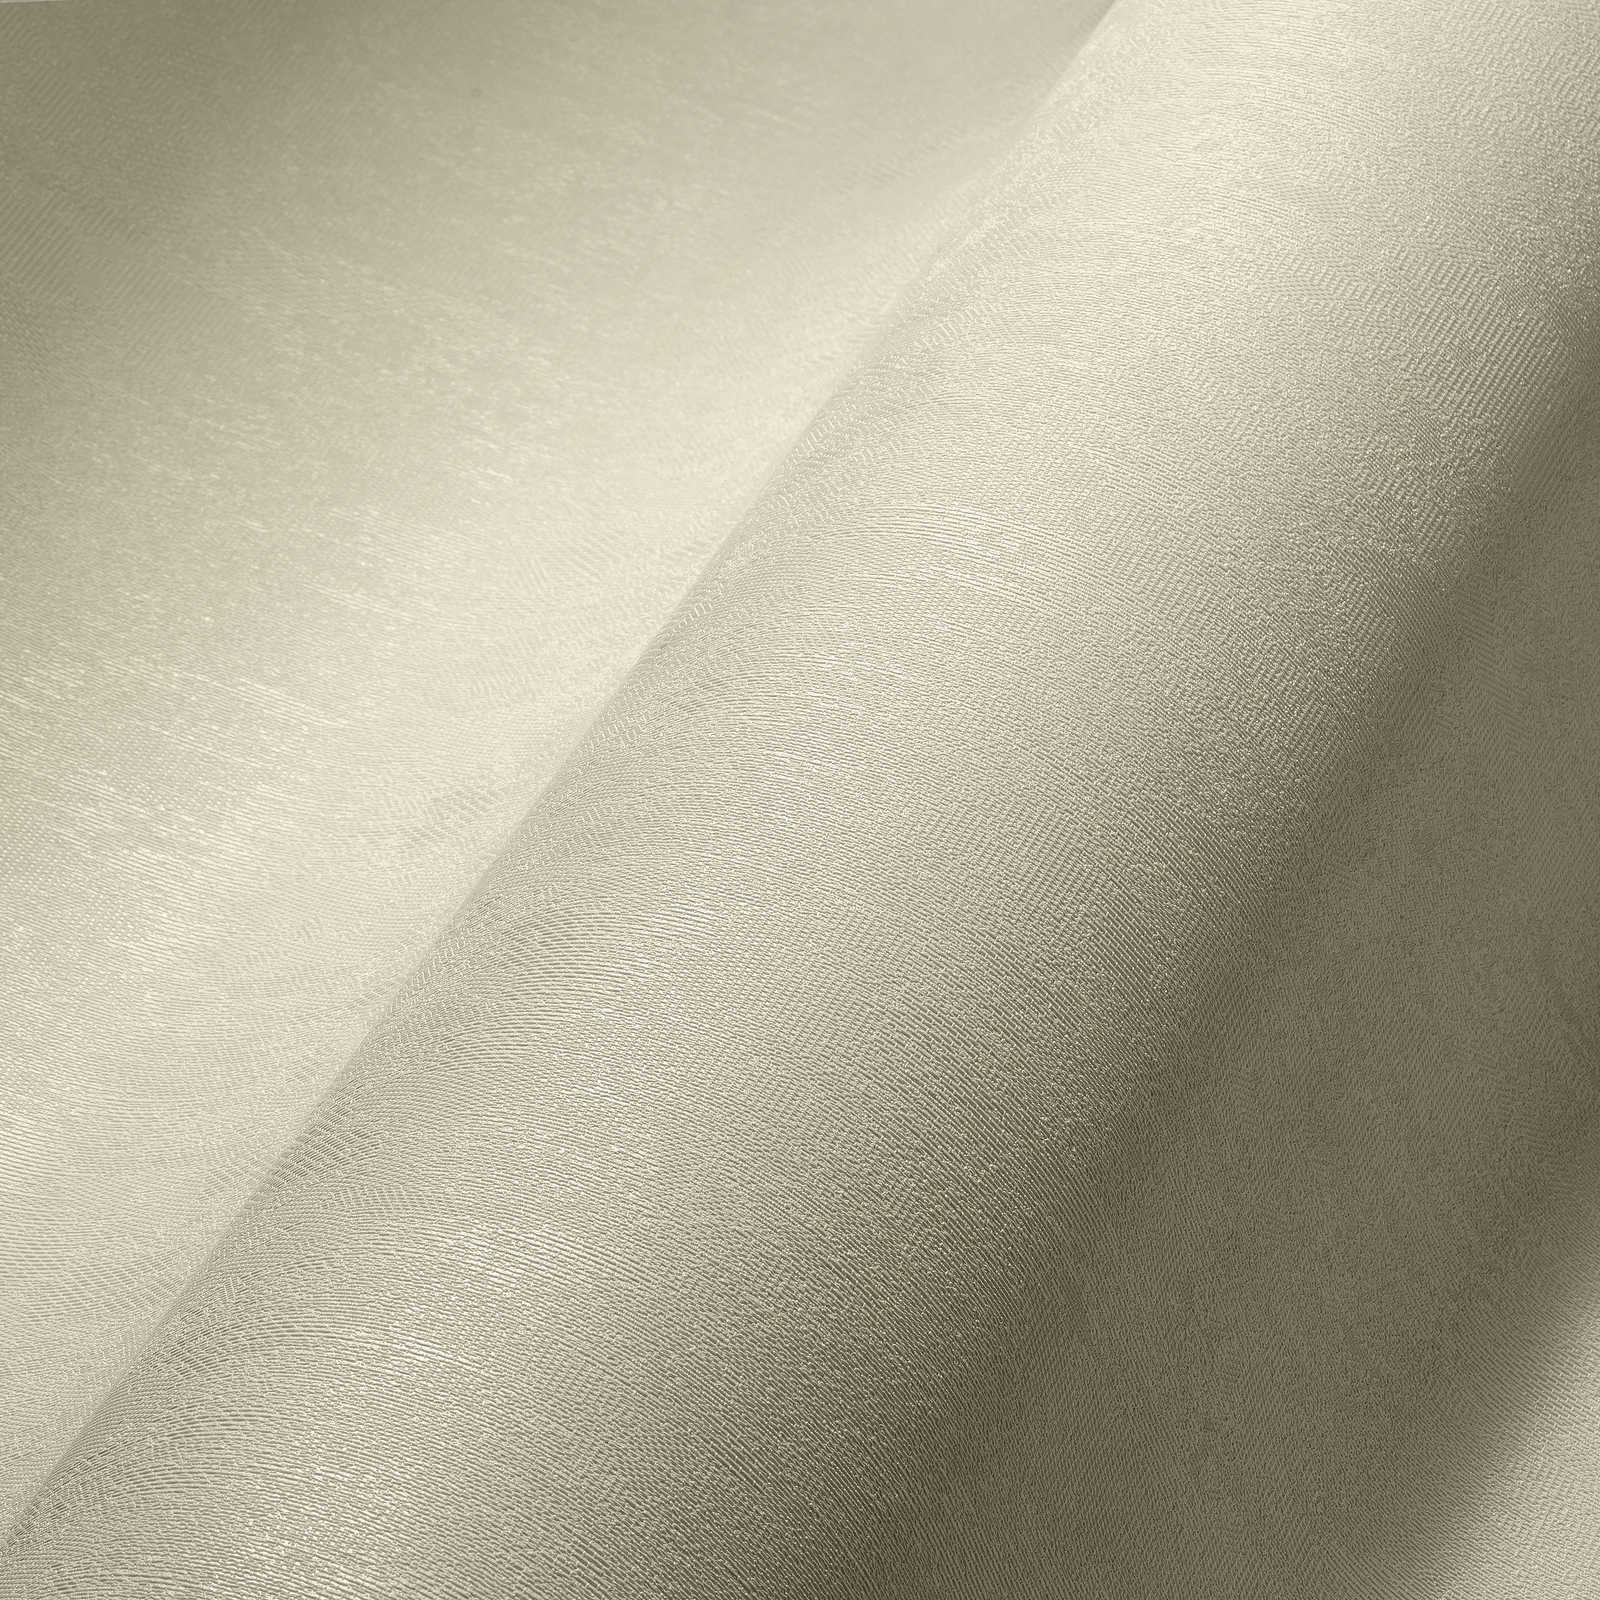             Non-woven wallpaper cream-white plain with textured surface
        